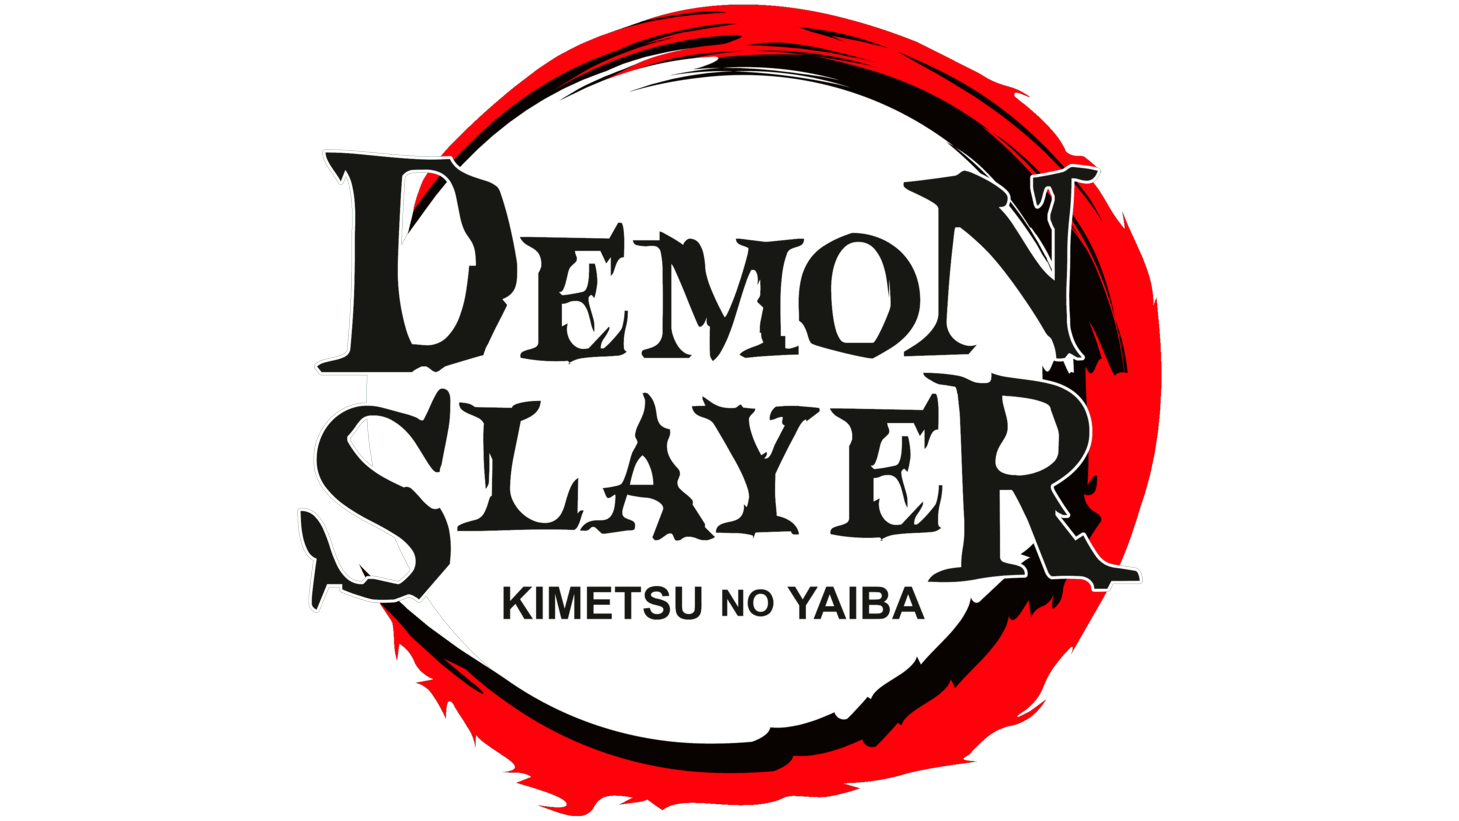 Demon slayer sign